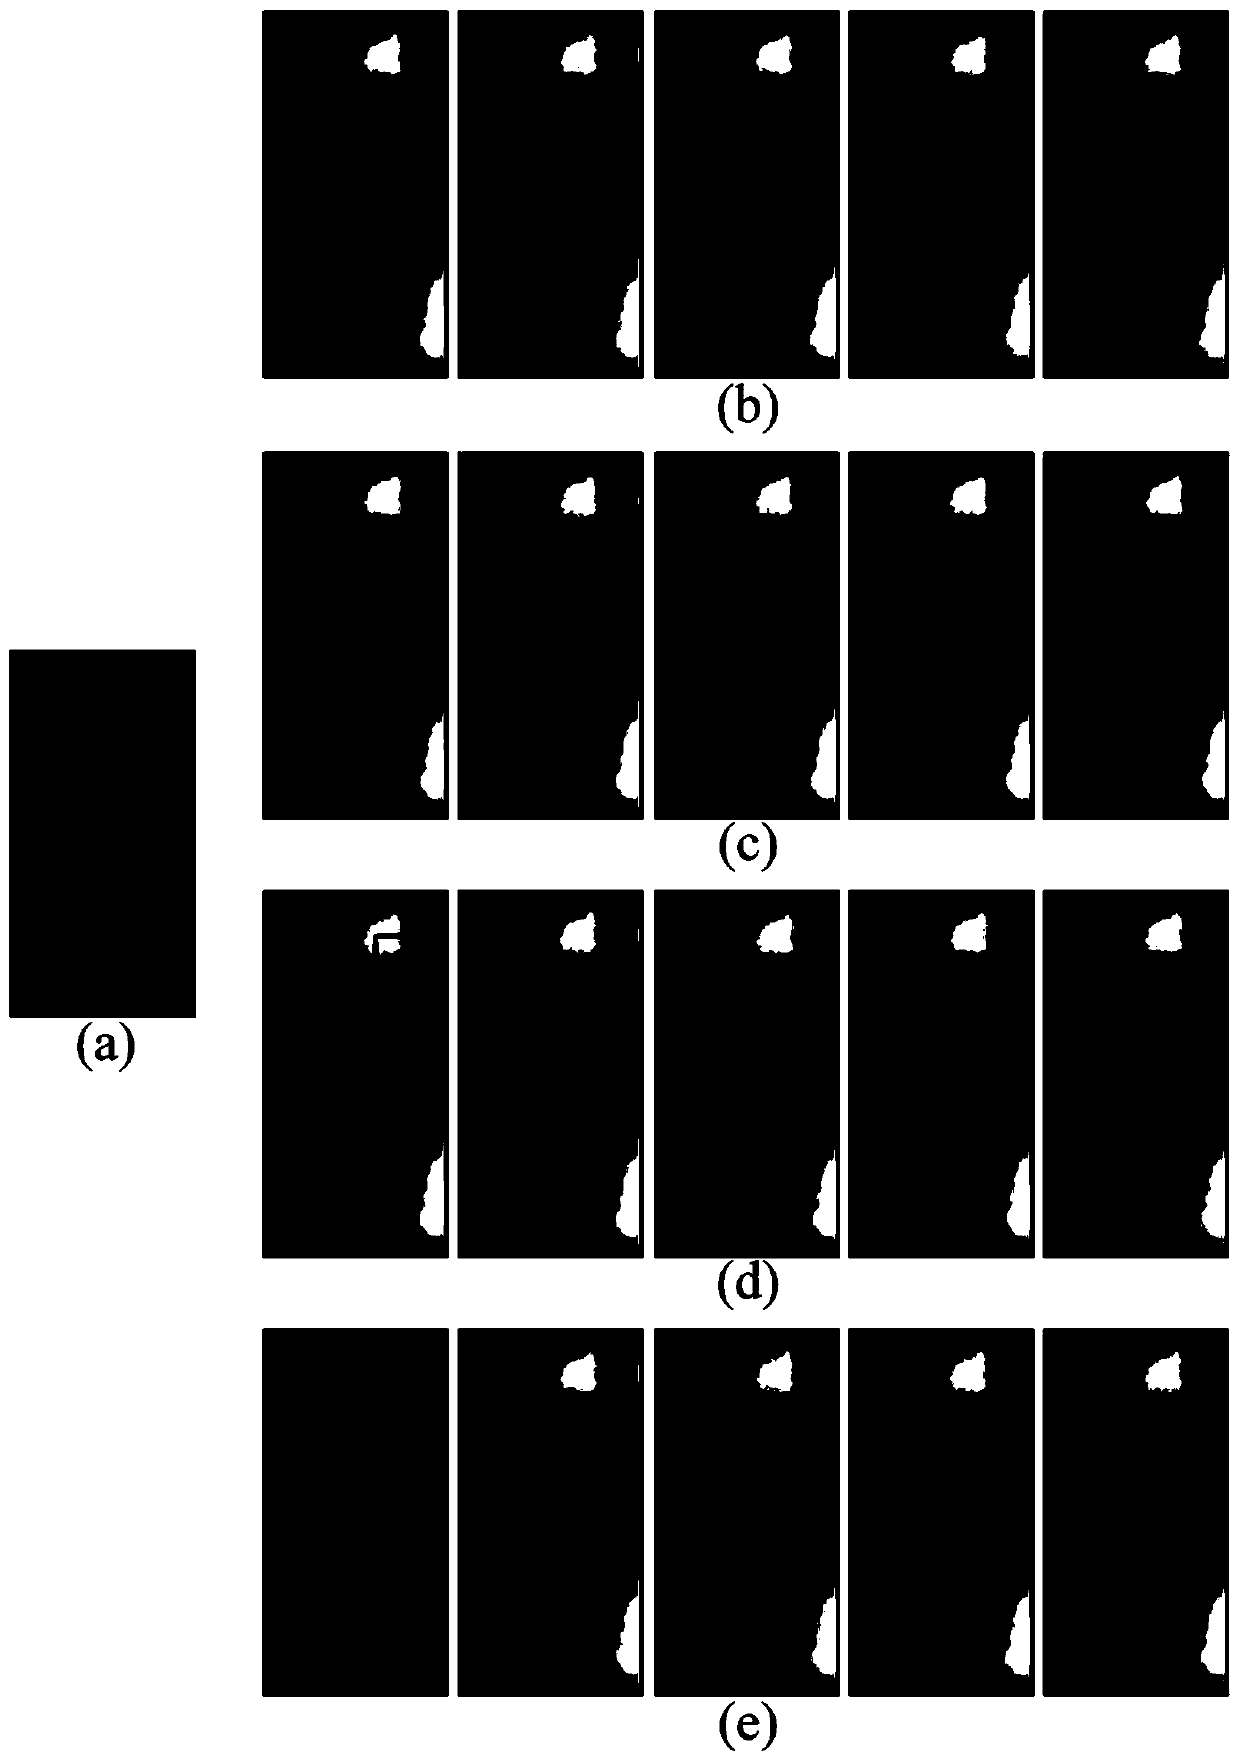 Finger vein image quick segmentation method based on active contour model